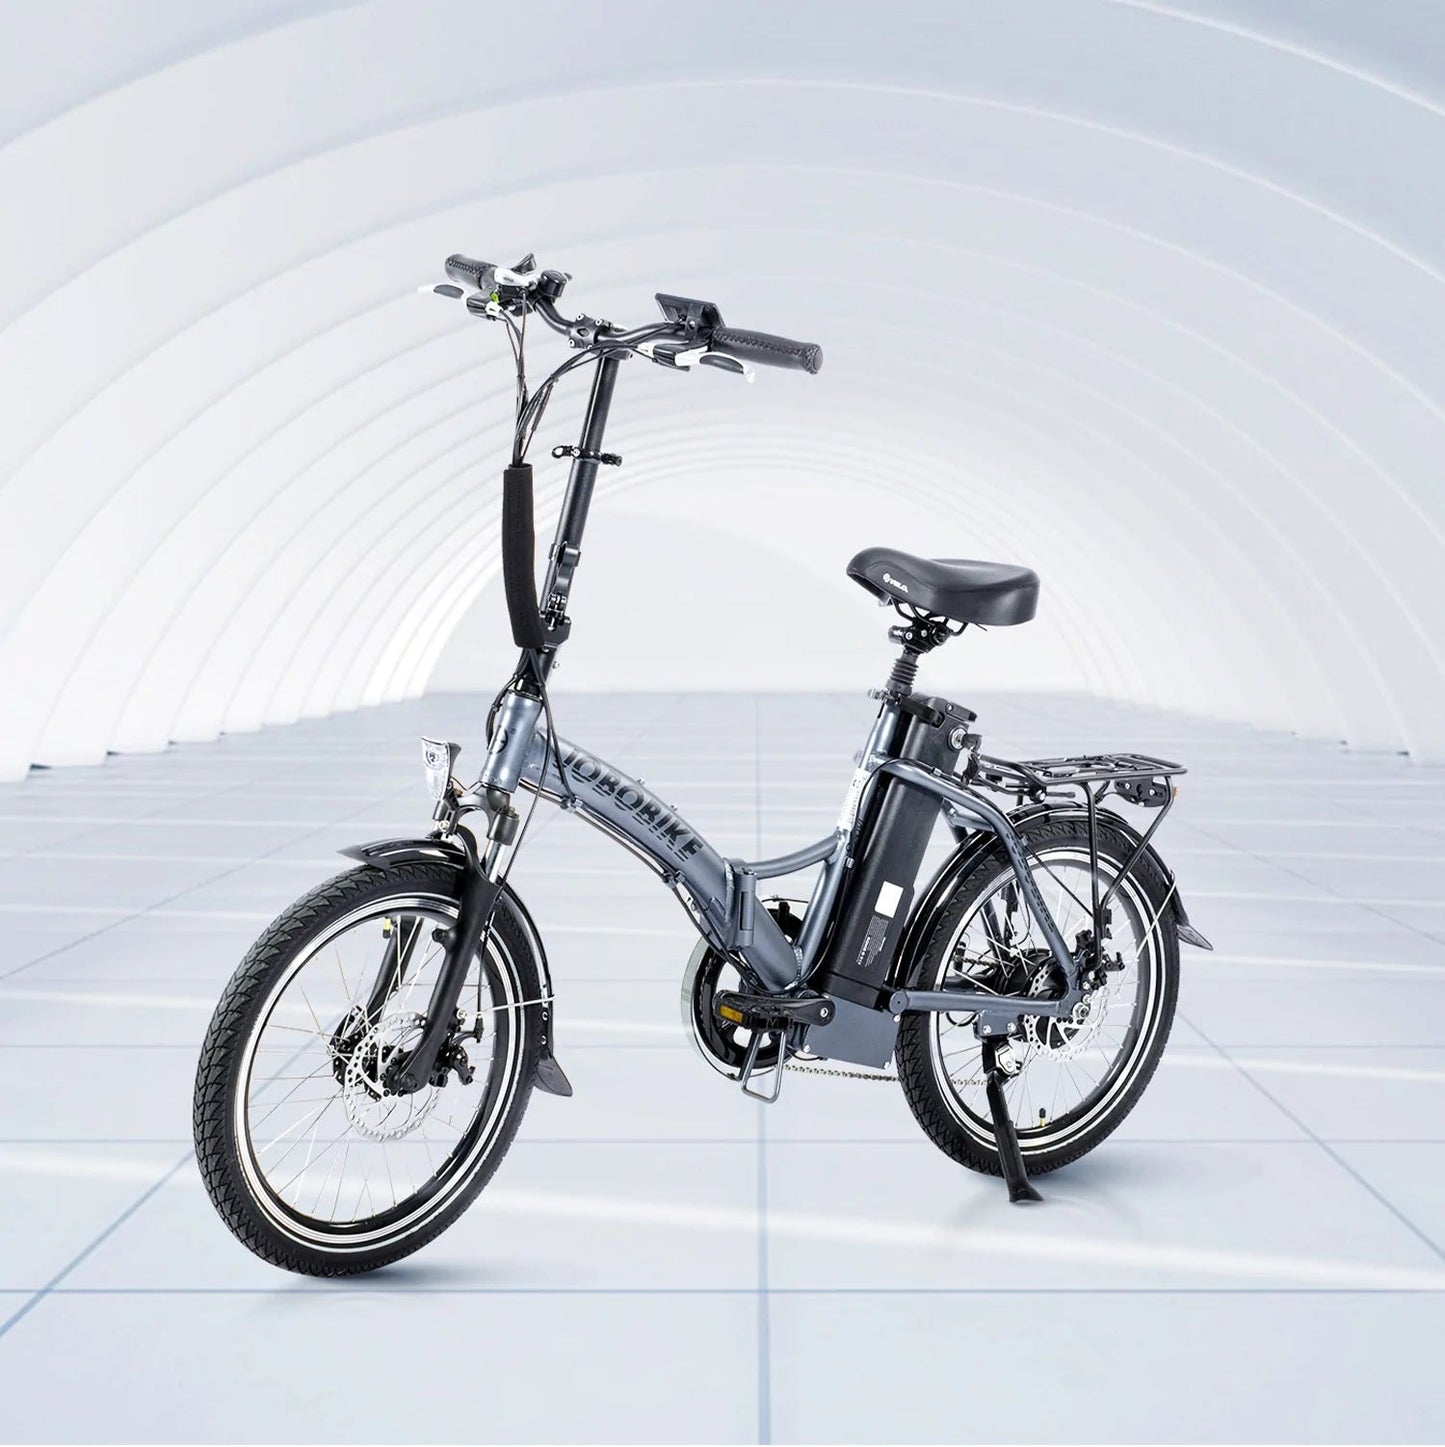 JOBOBIKE Sam e-bike 7 20 speed inch freewheel – Shimano 11-28T